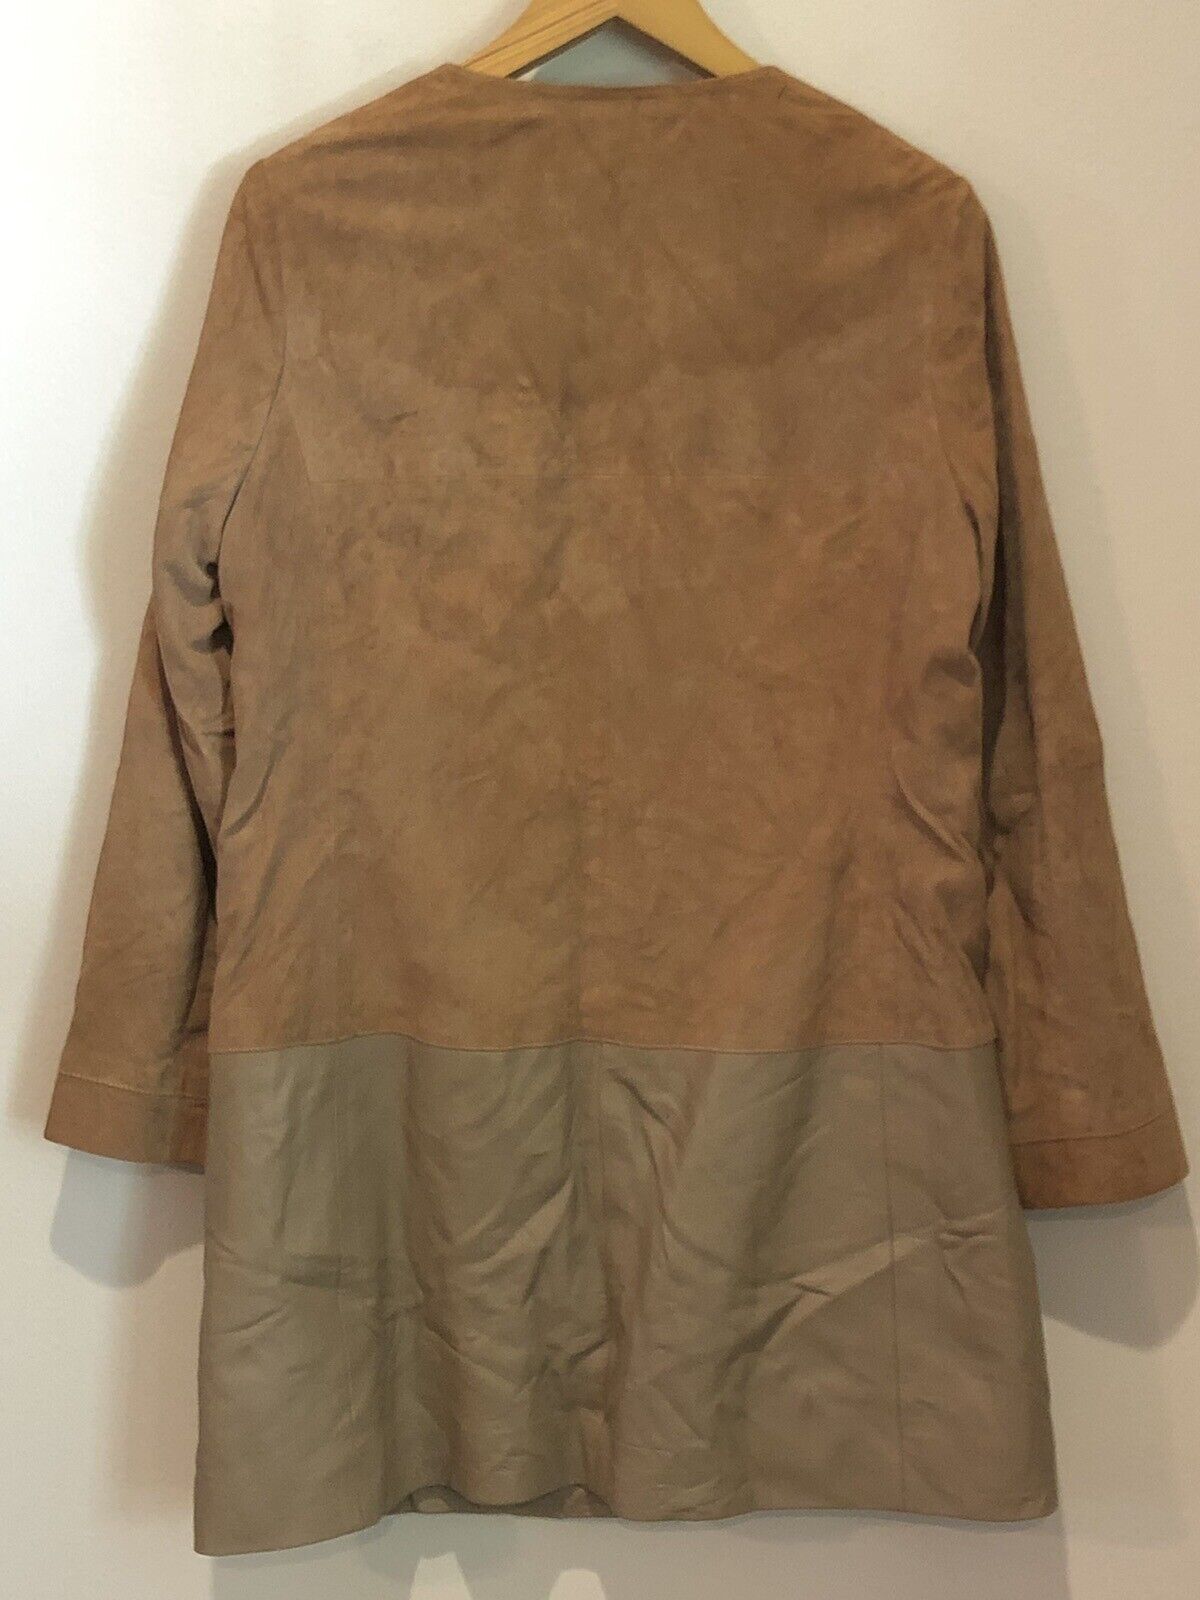 Chicos Suede Leather Jacket Women 8 Long Brown La… - image 2